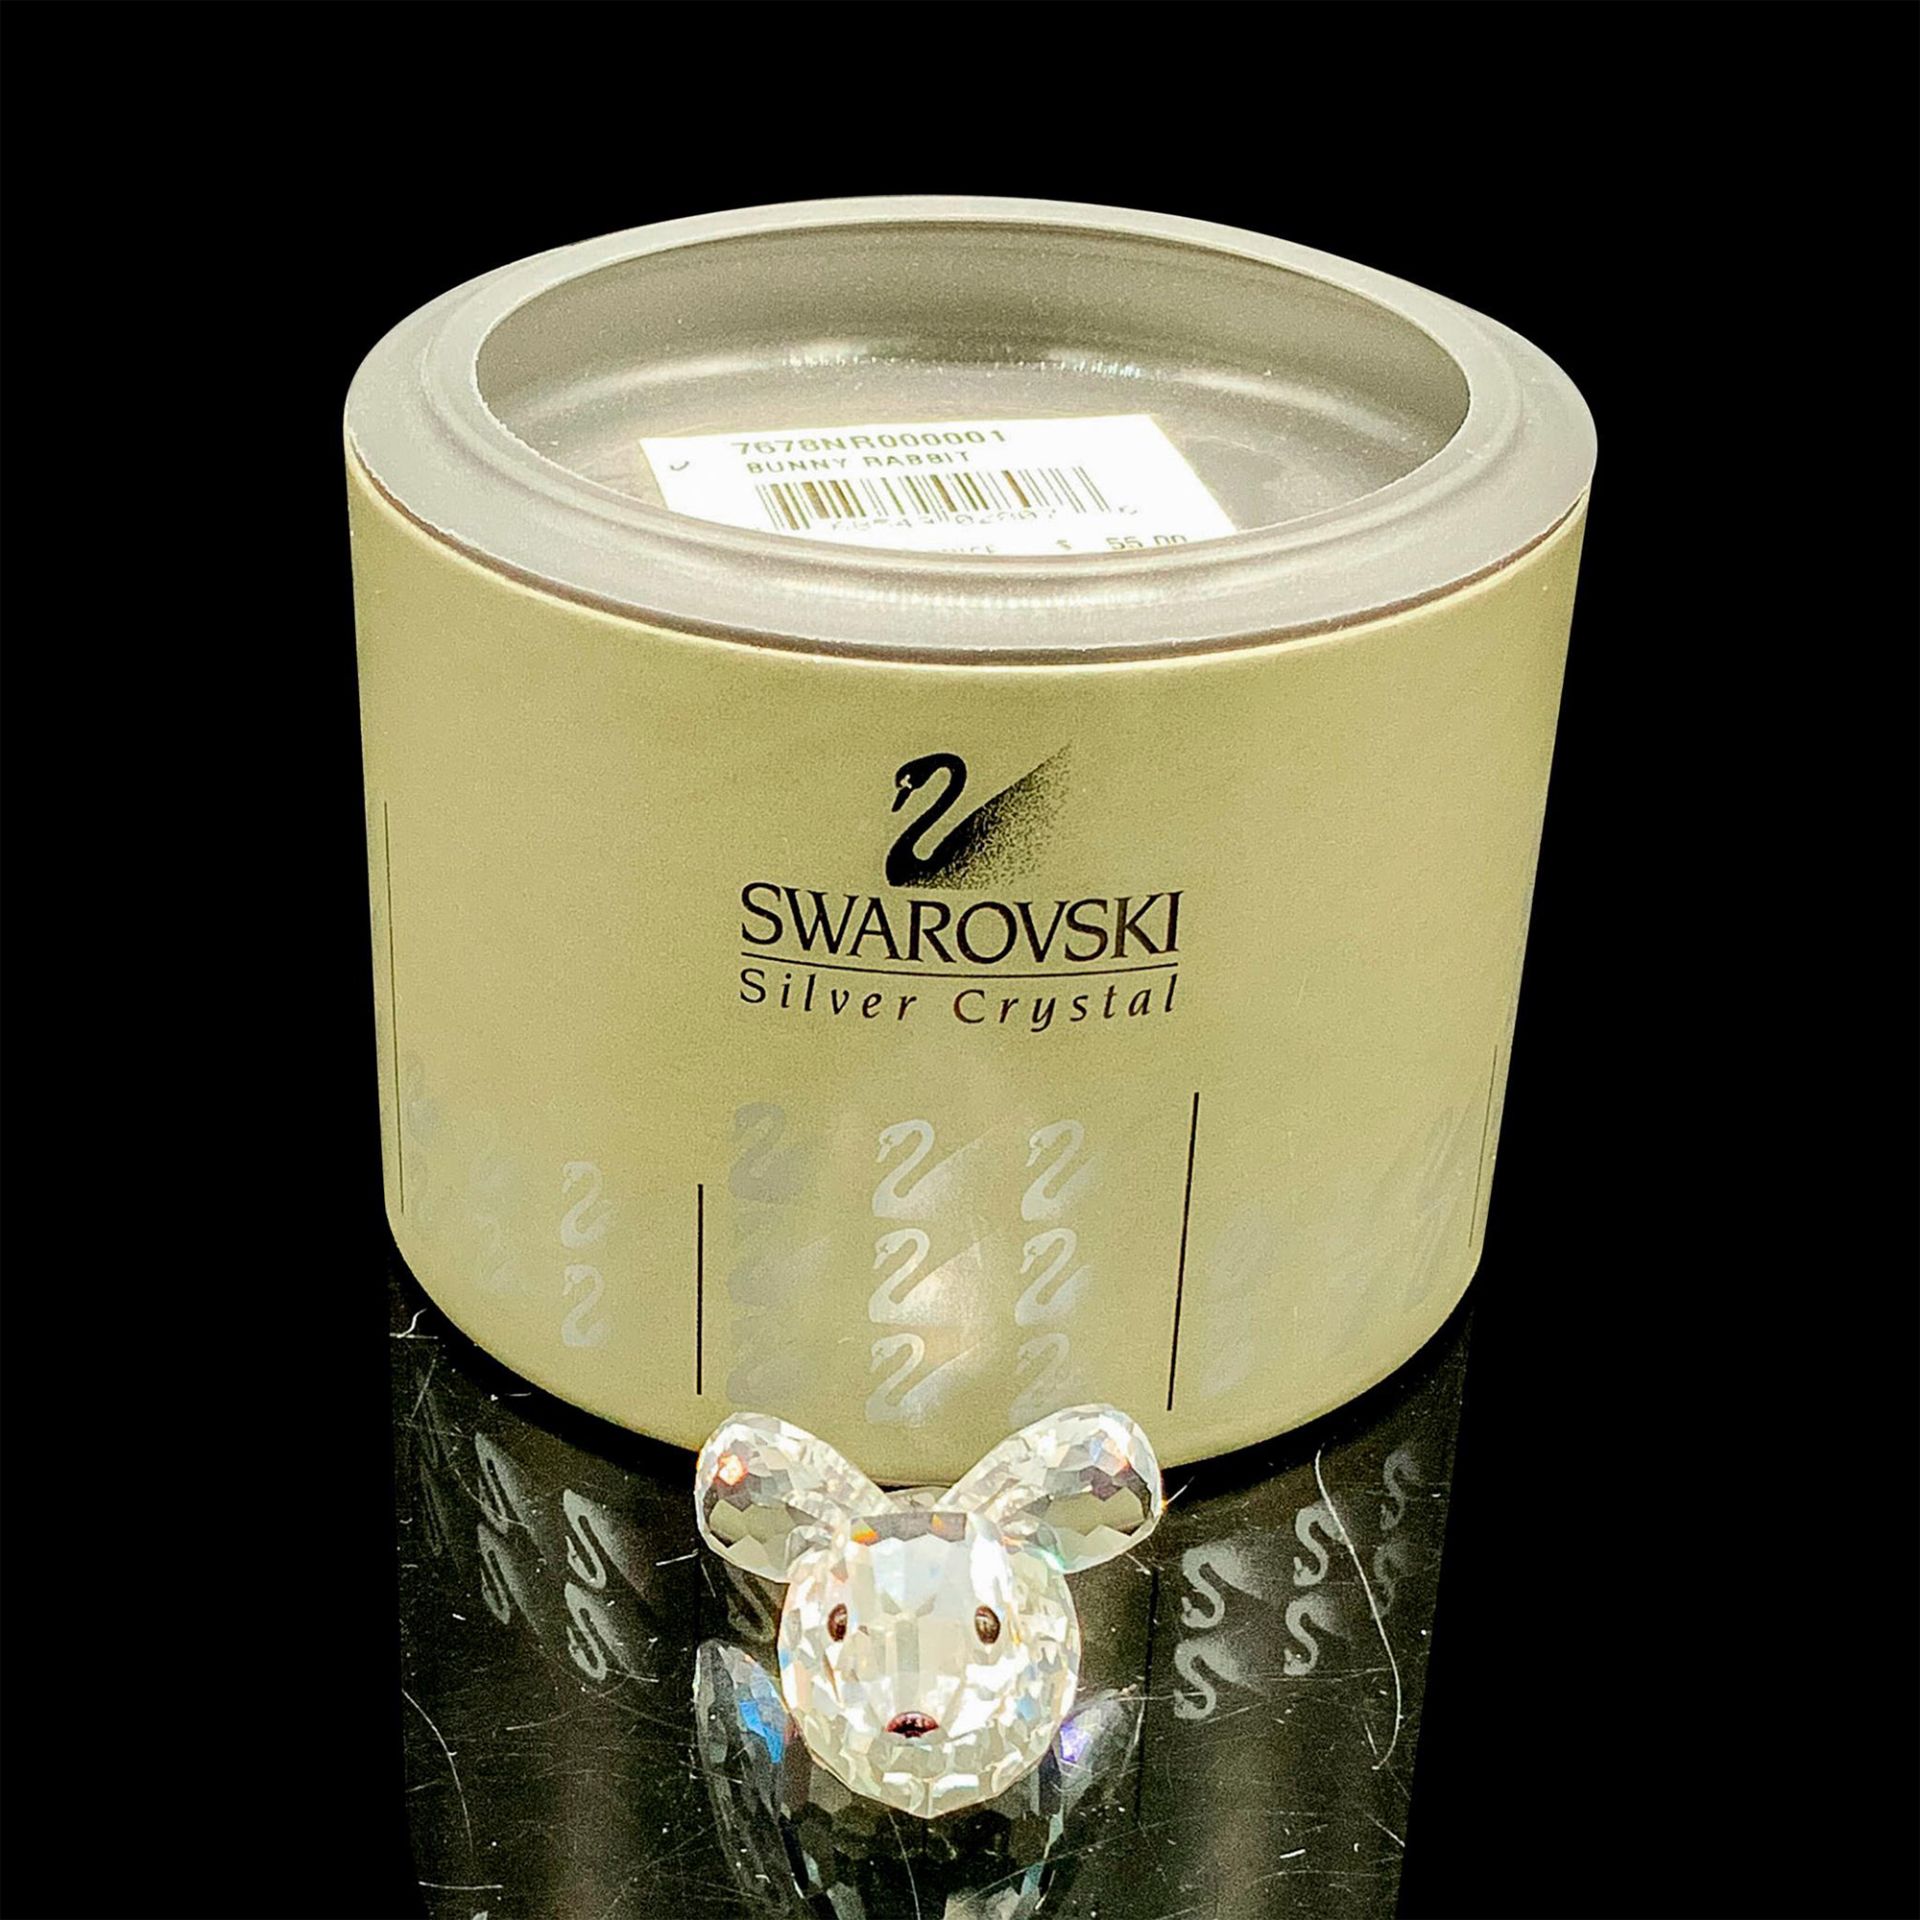 Swarovski Silver Crystal Figurine, Bunny Rabbit 208326 - Image 3 of 3